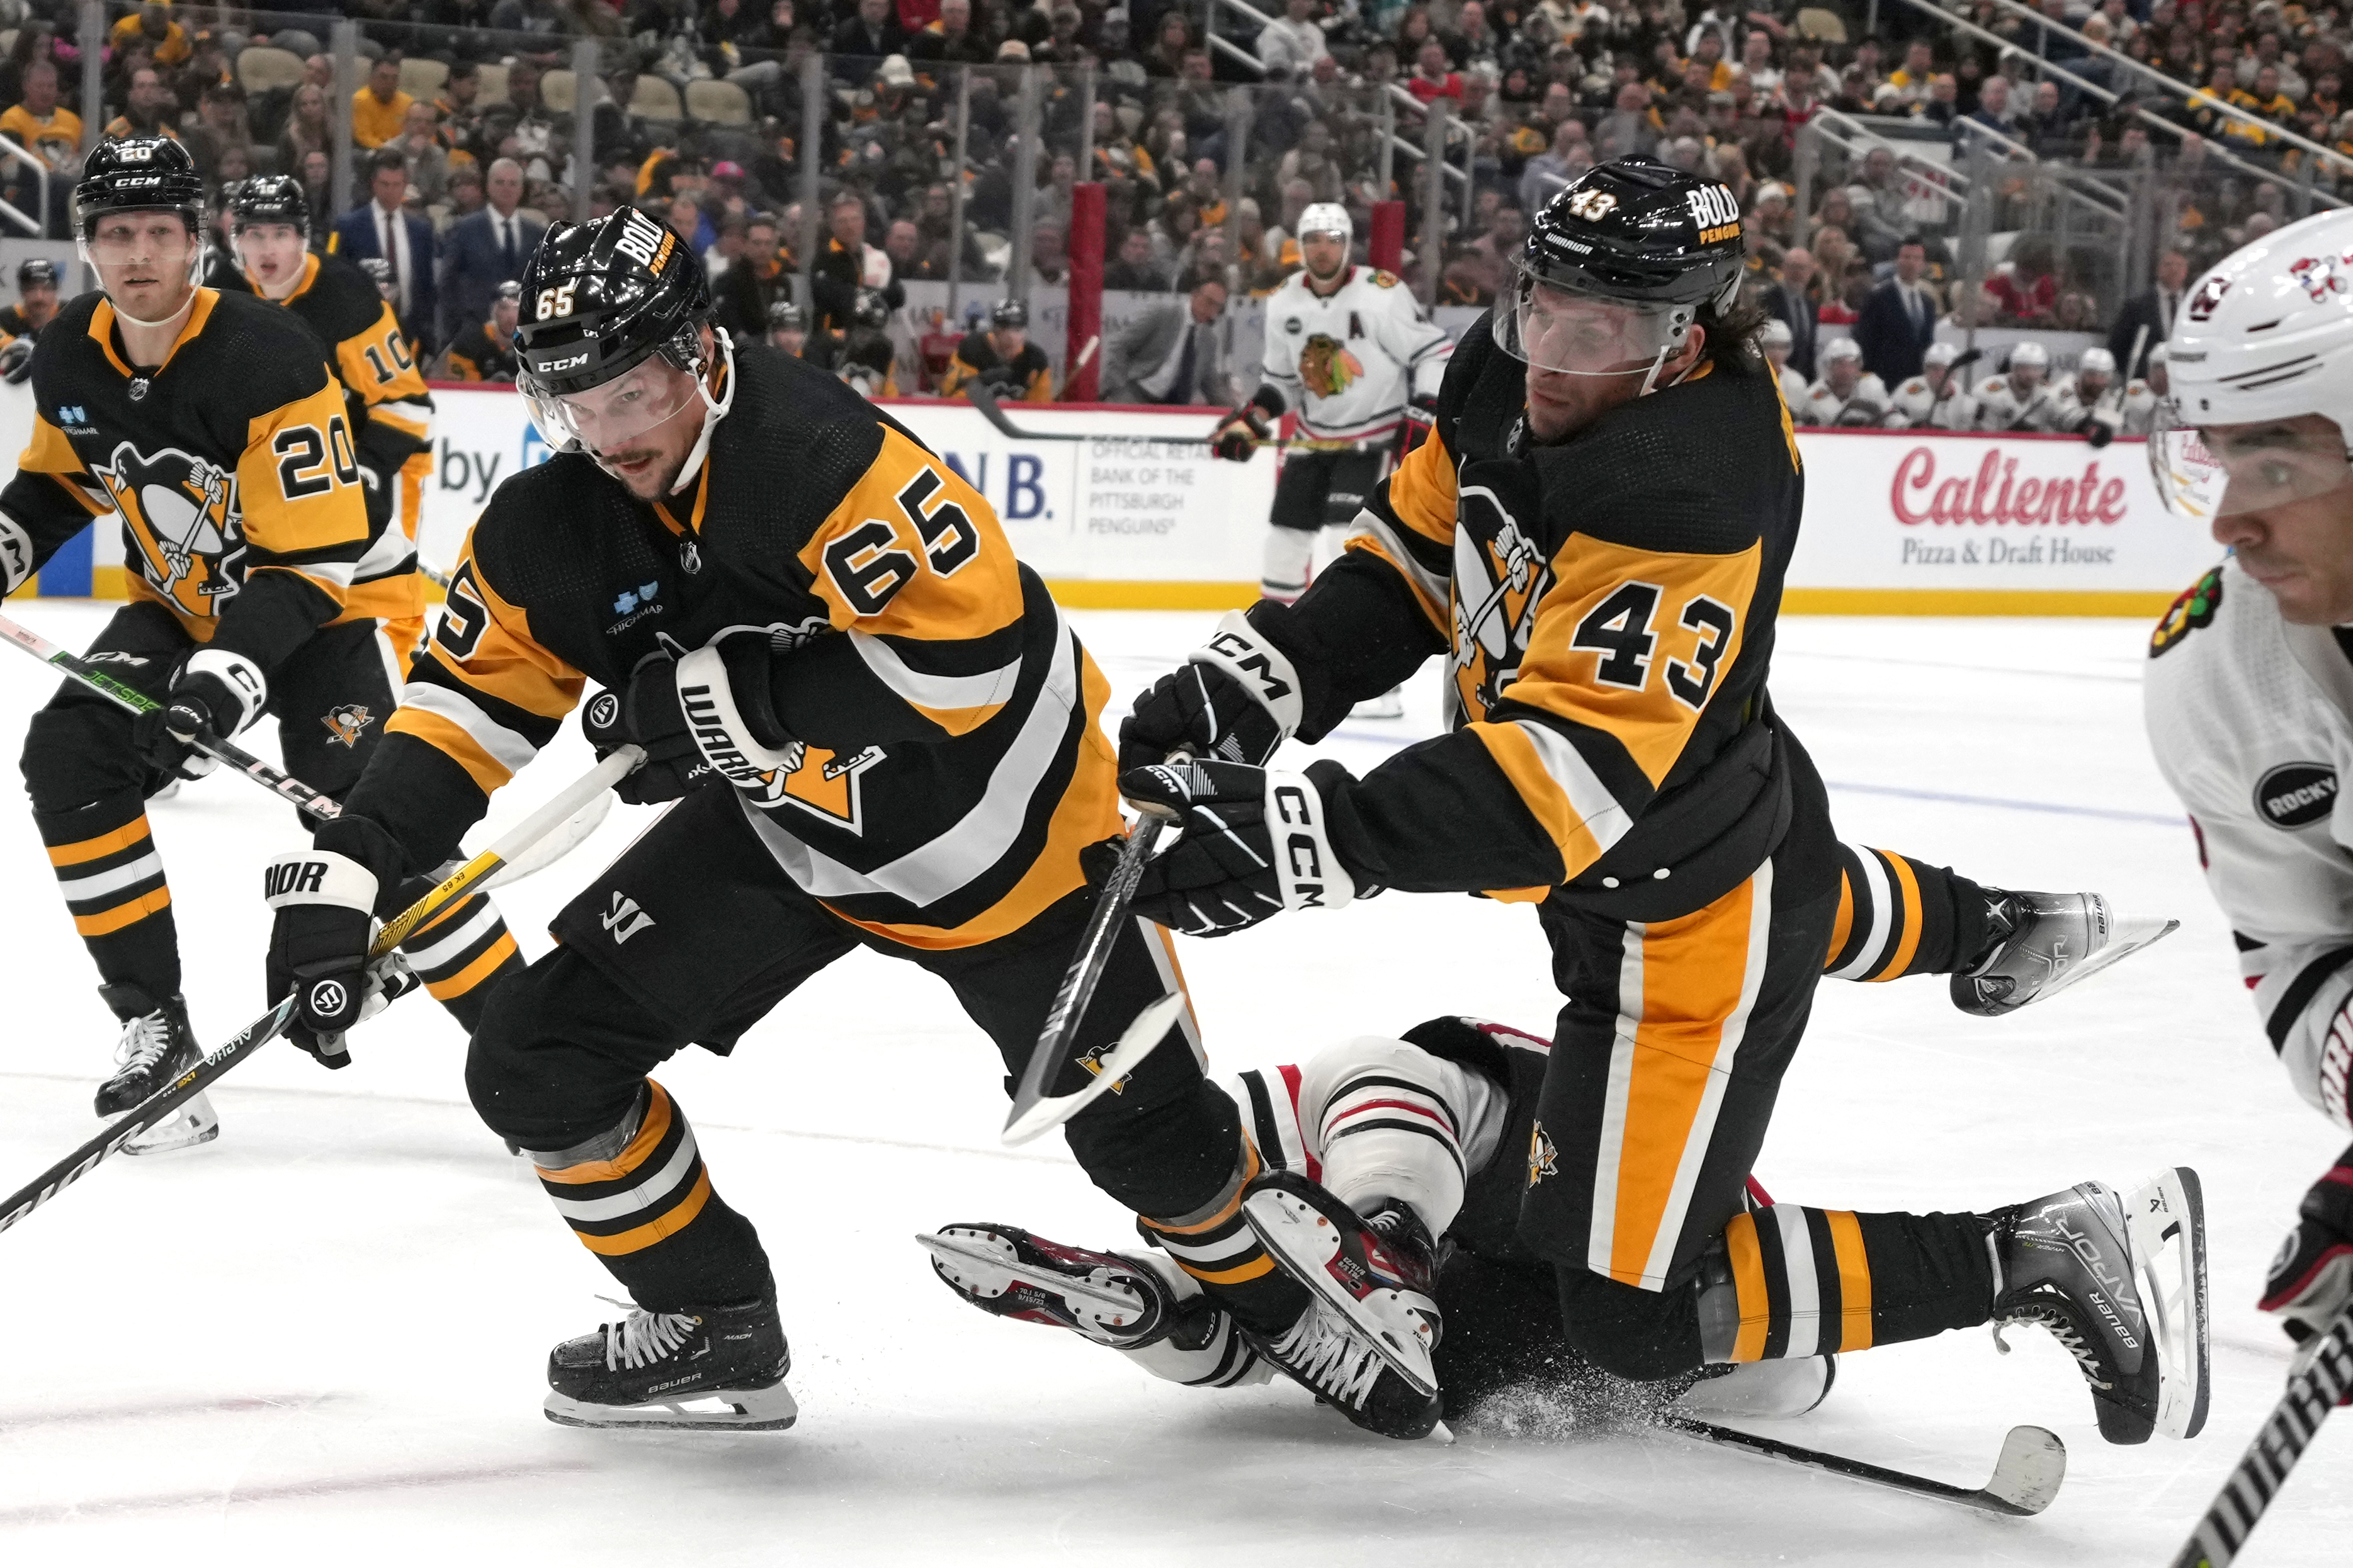 New Jersey Devils vs. Pittsburgh Penguins: Live Stream, TV Channel